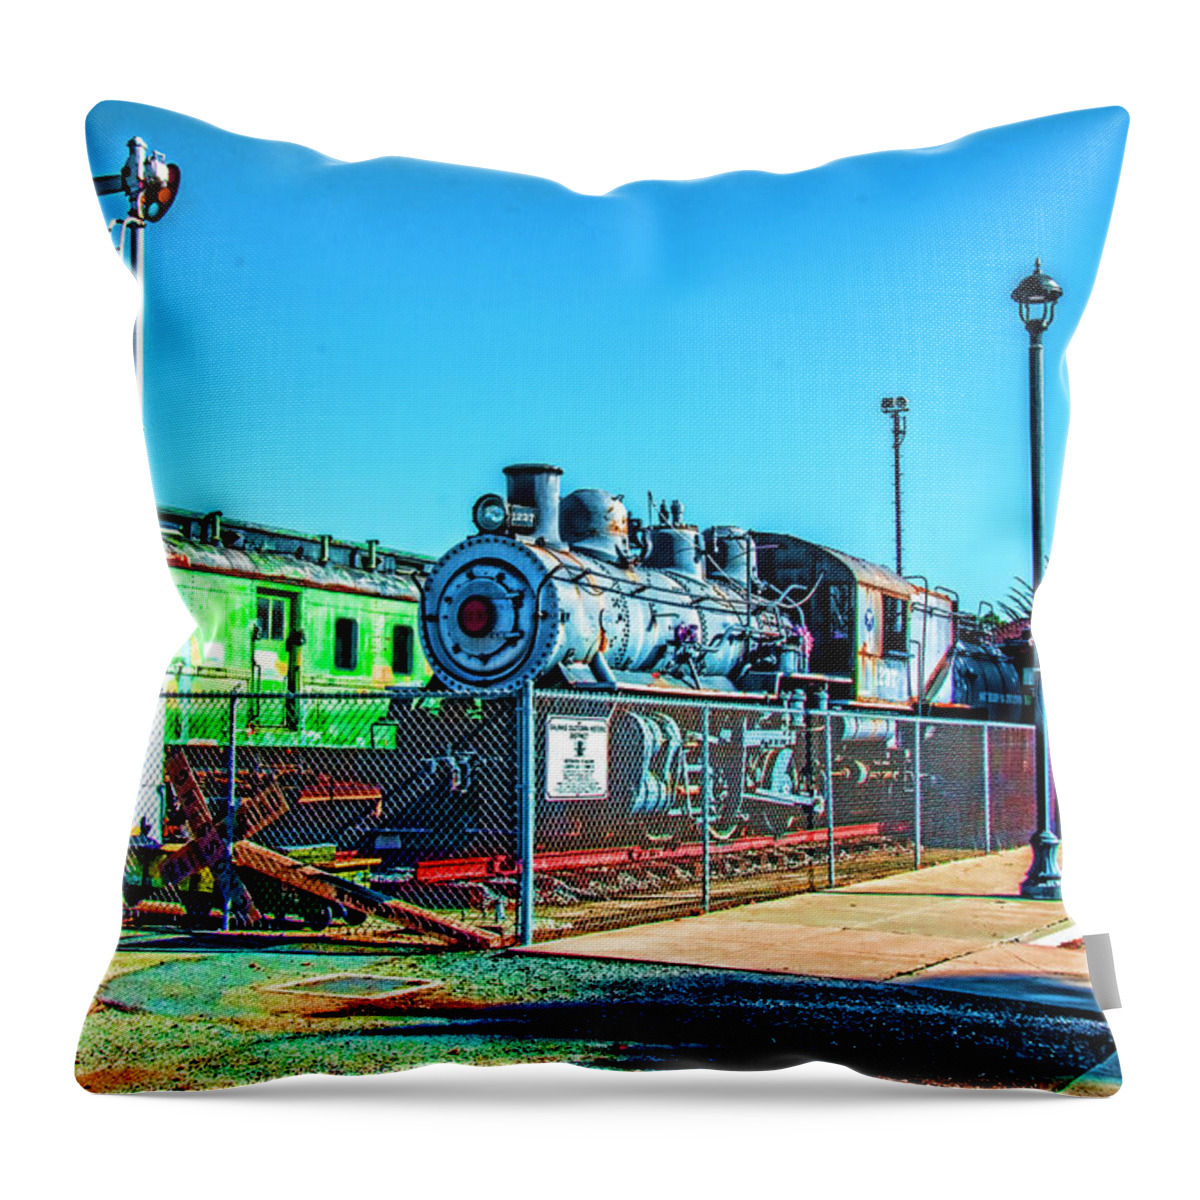 Old Salinas Train Throw Pillow featuring the digital art Old Salinas Cho Cho by Daniel Hebard